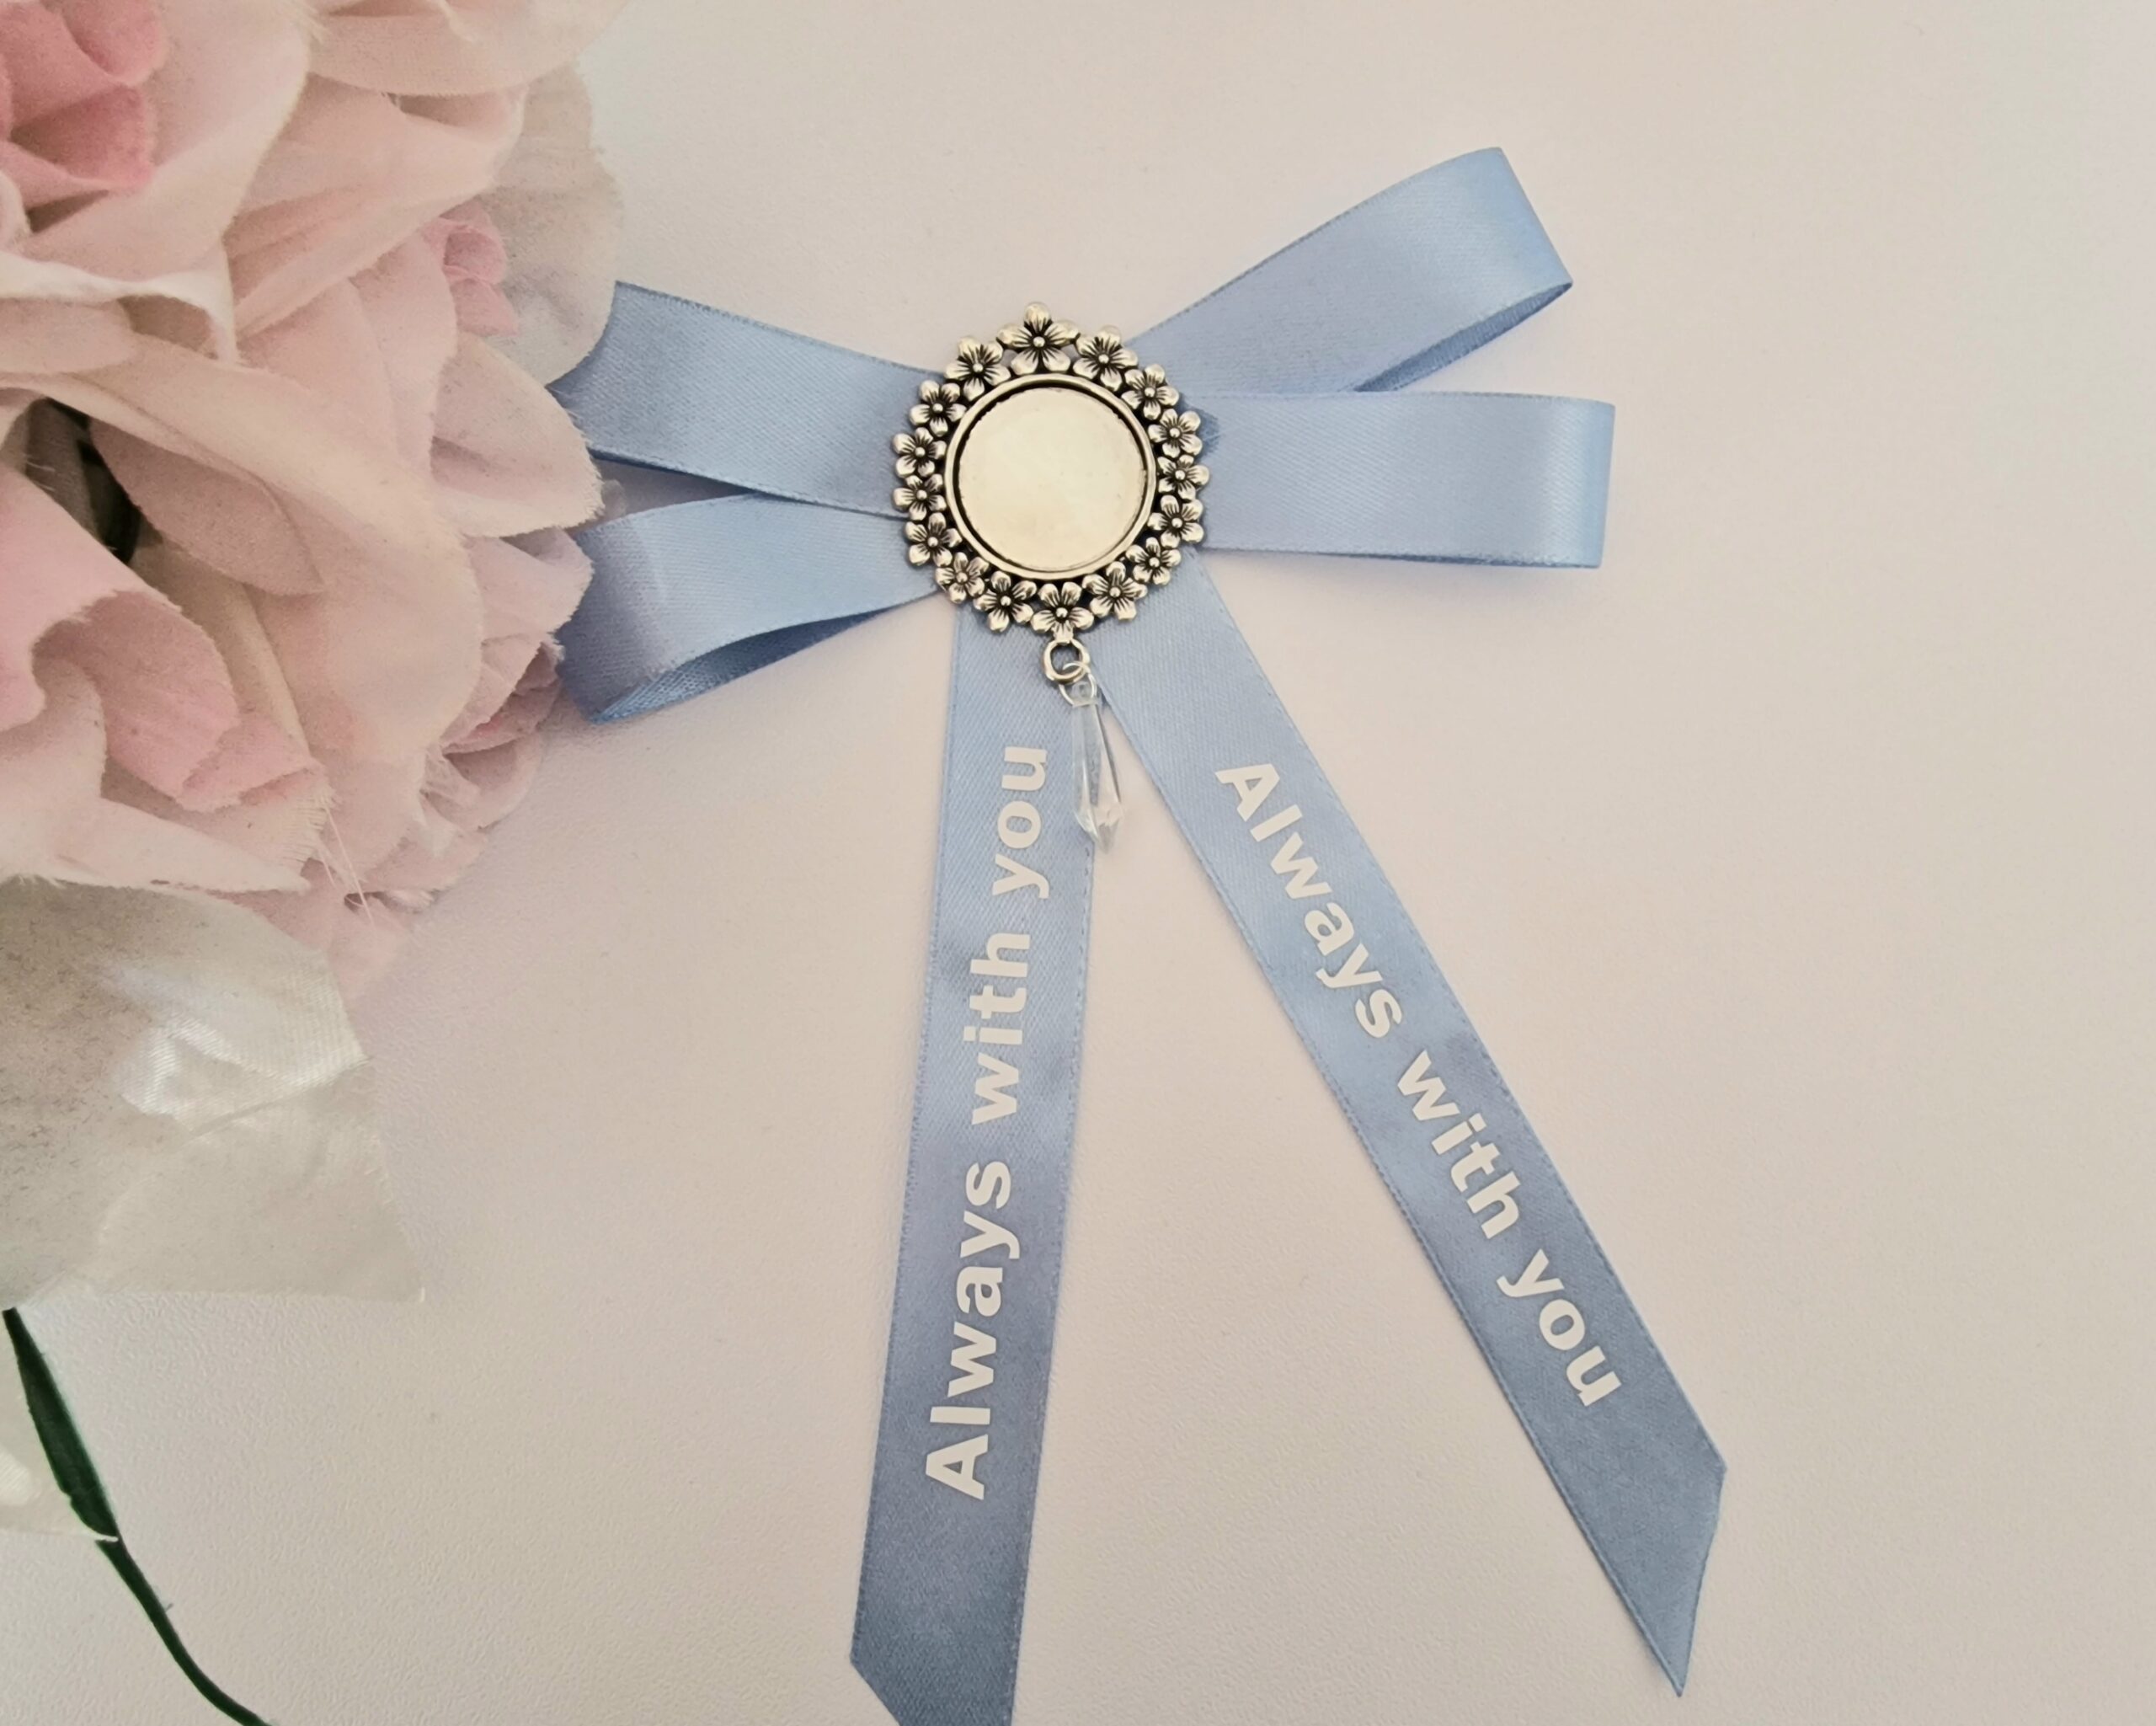 Sample light blue bouquet ribbon charm